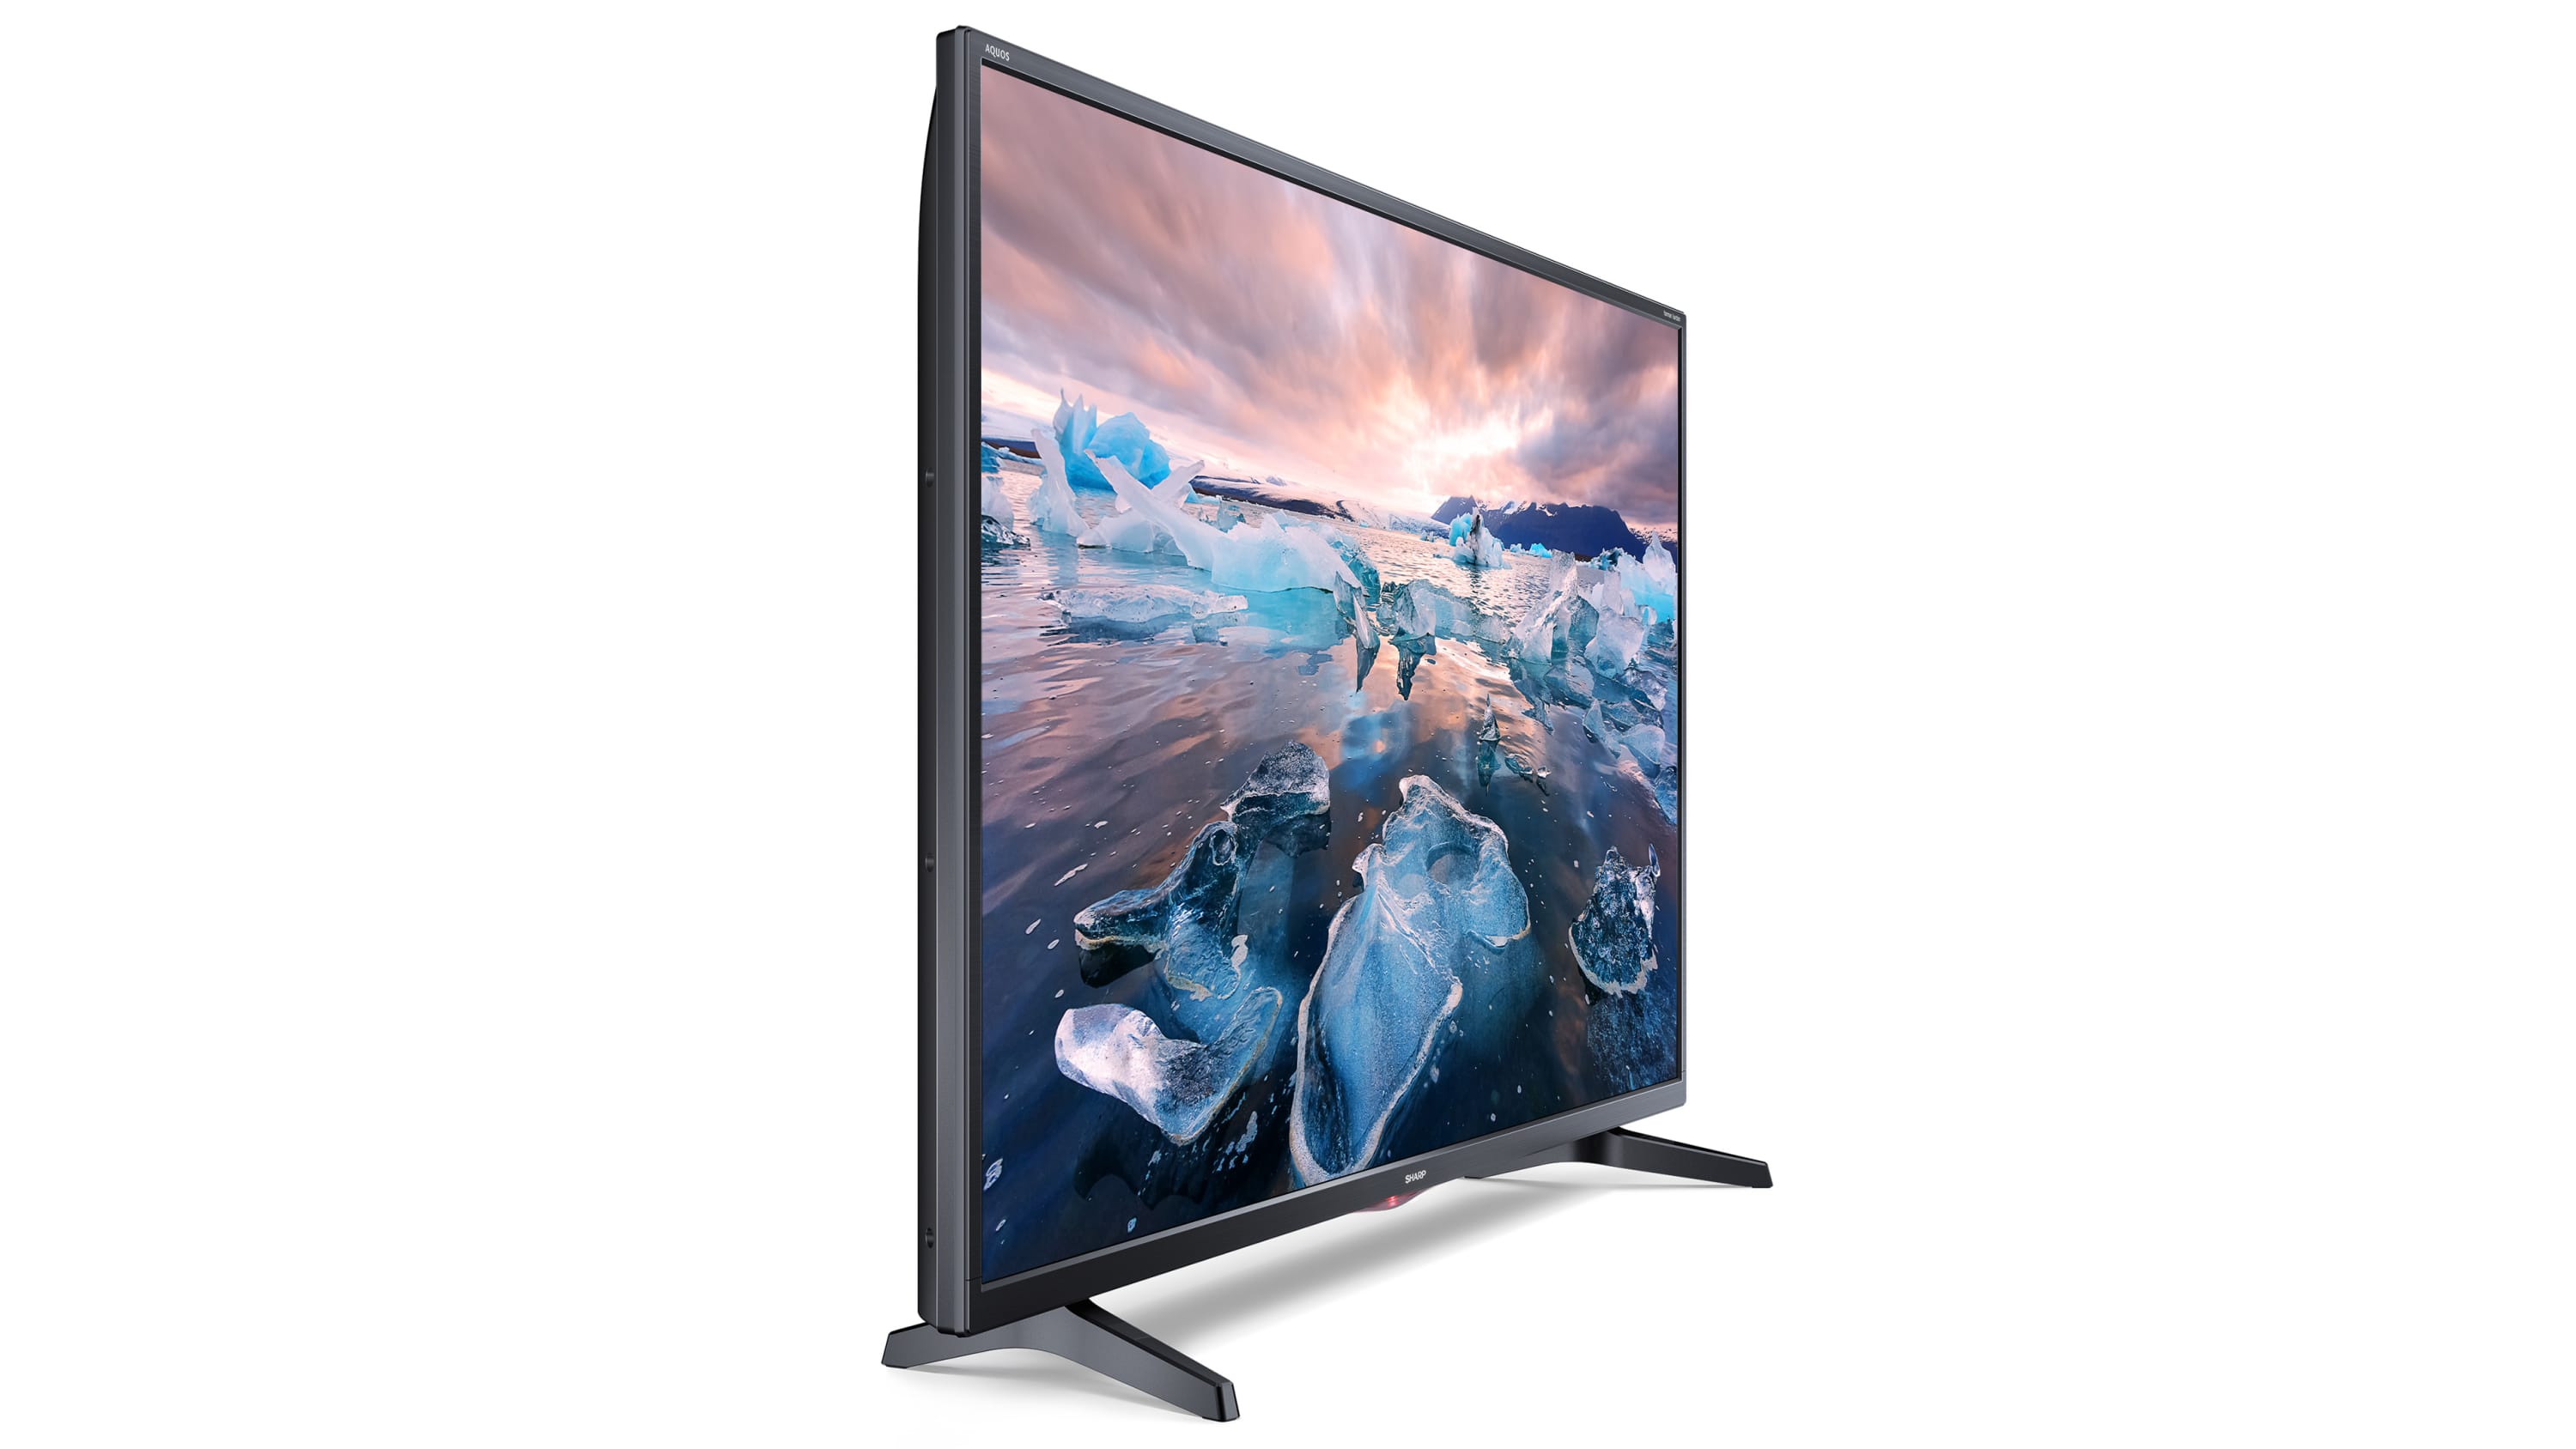 Smart TV HD/Full HD - 40" FULL HD SMART